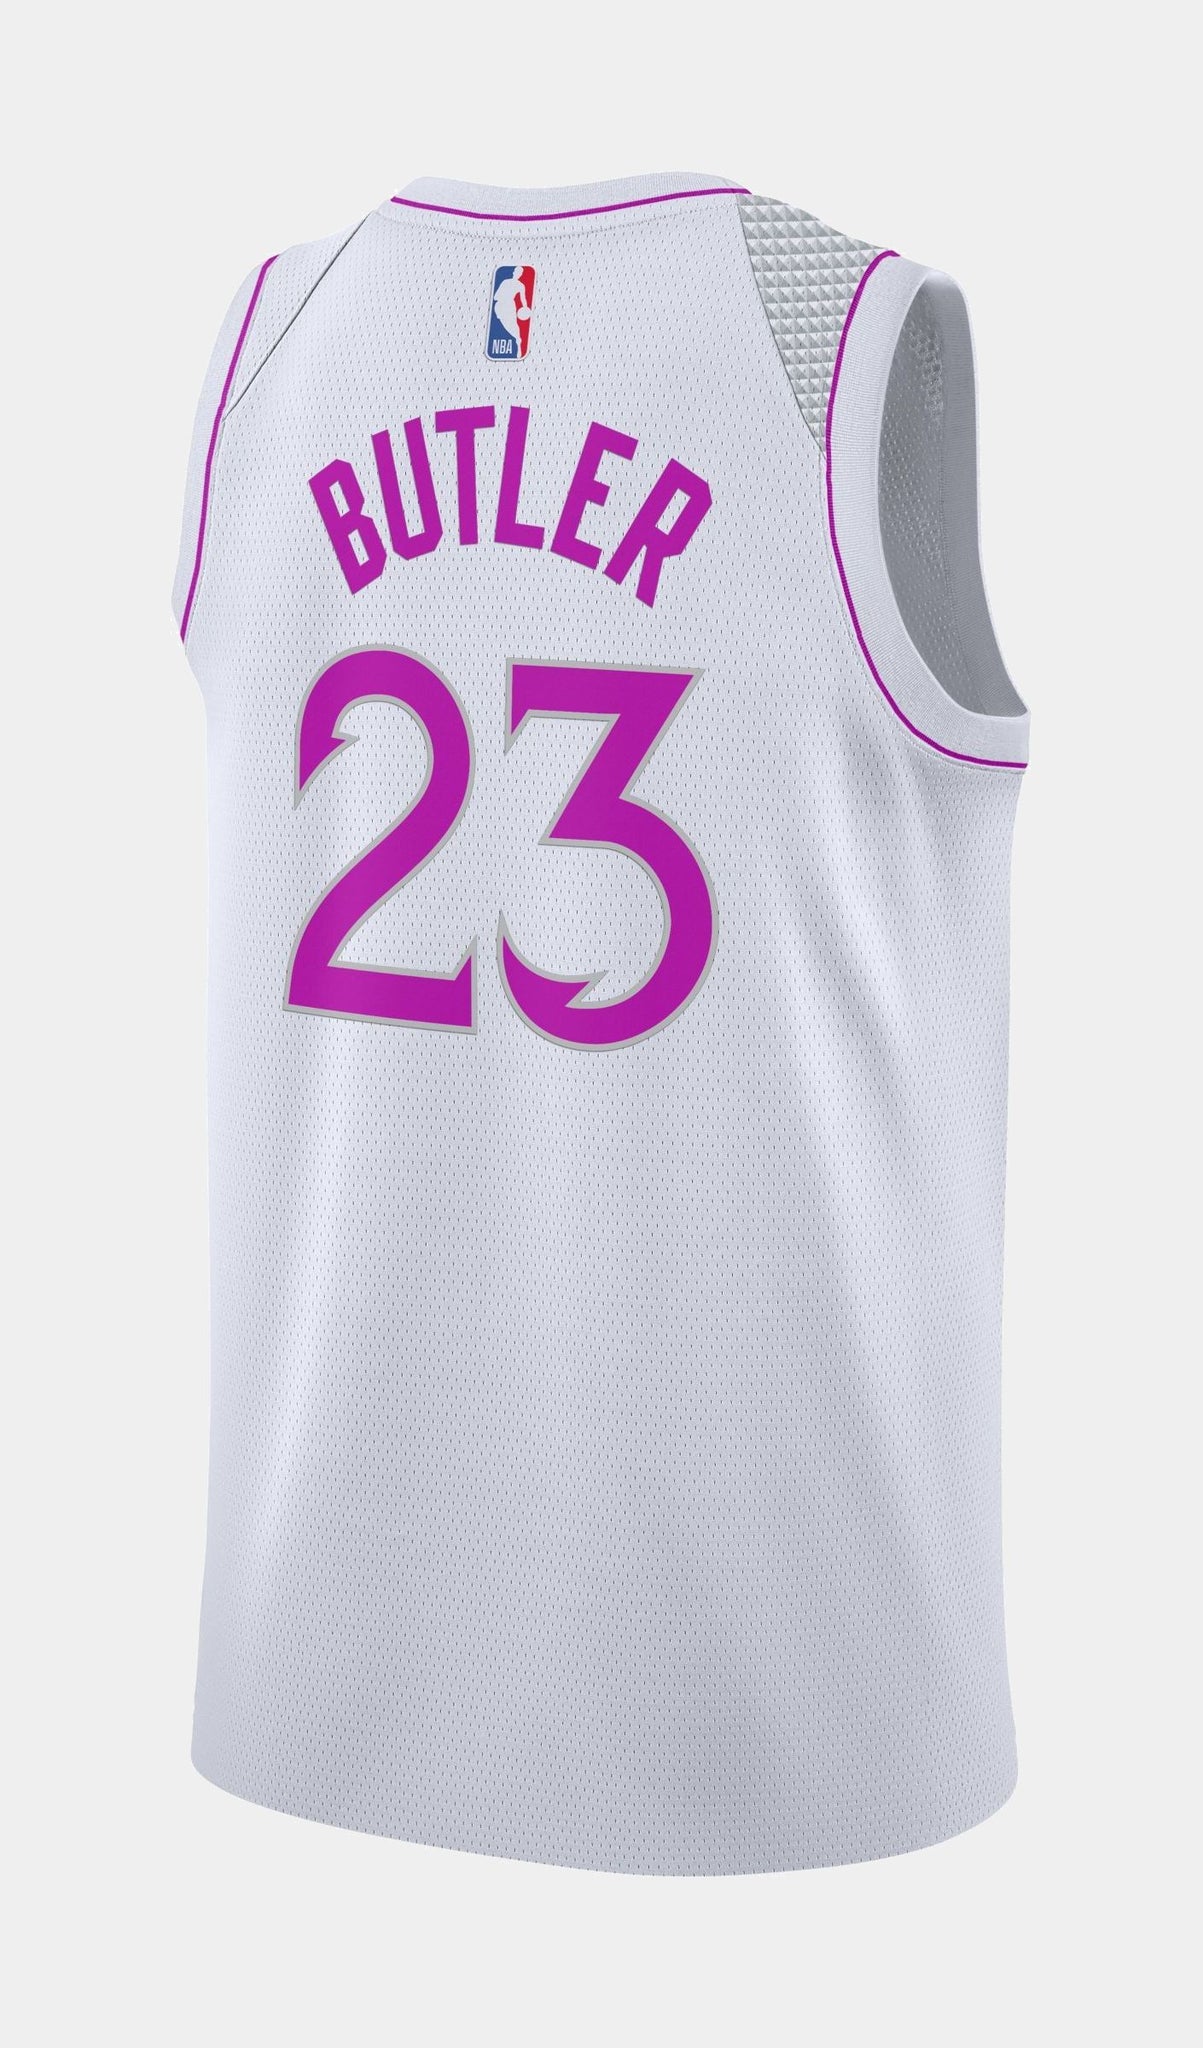 NWT Minnesota Timberwolves Mens XL Nike Jersey #23 Butler